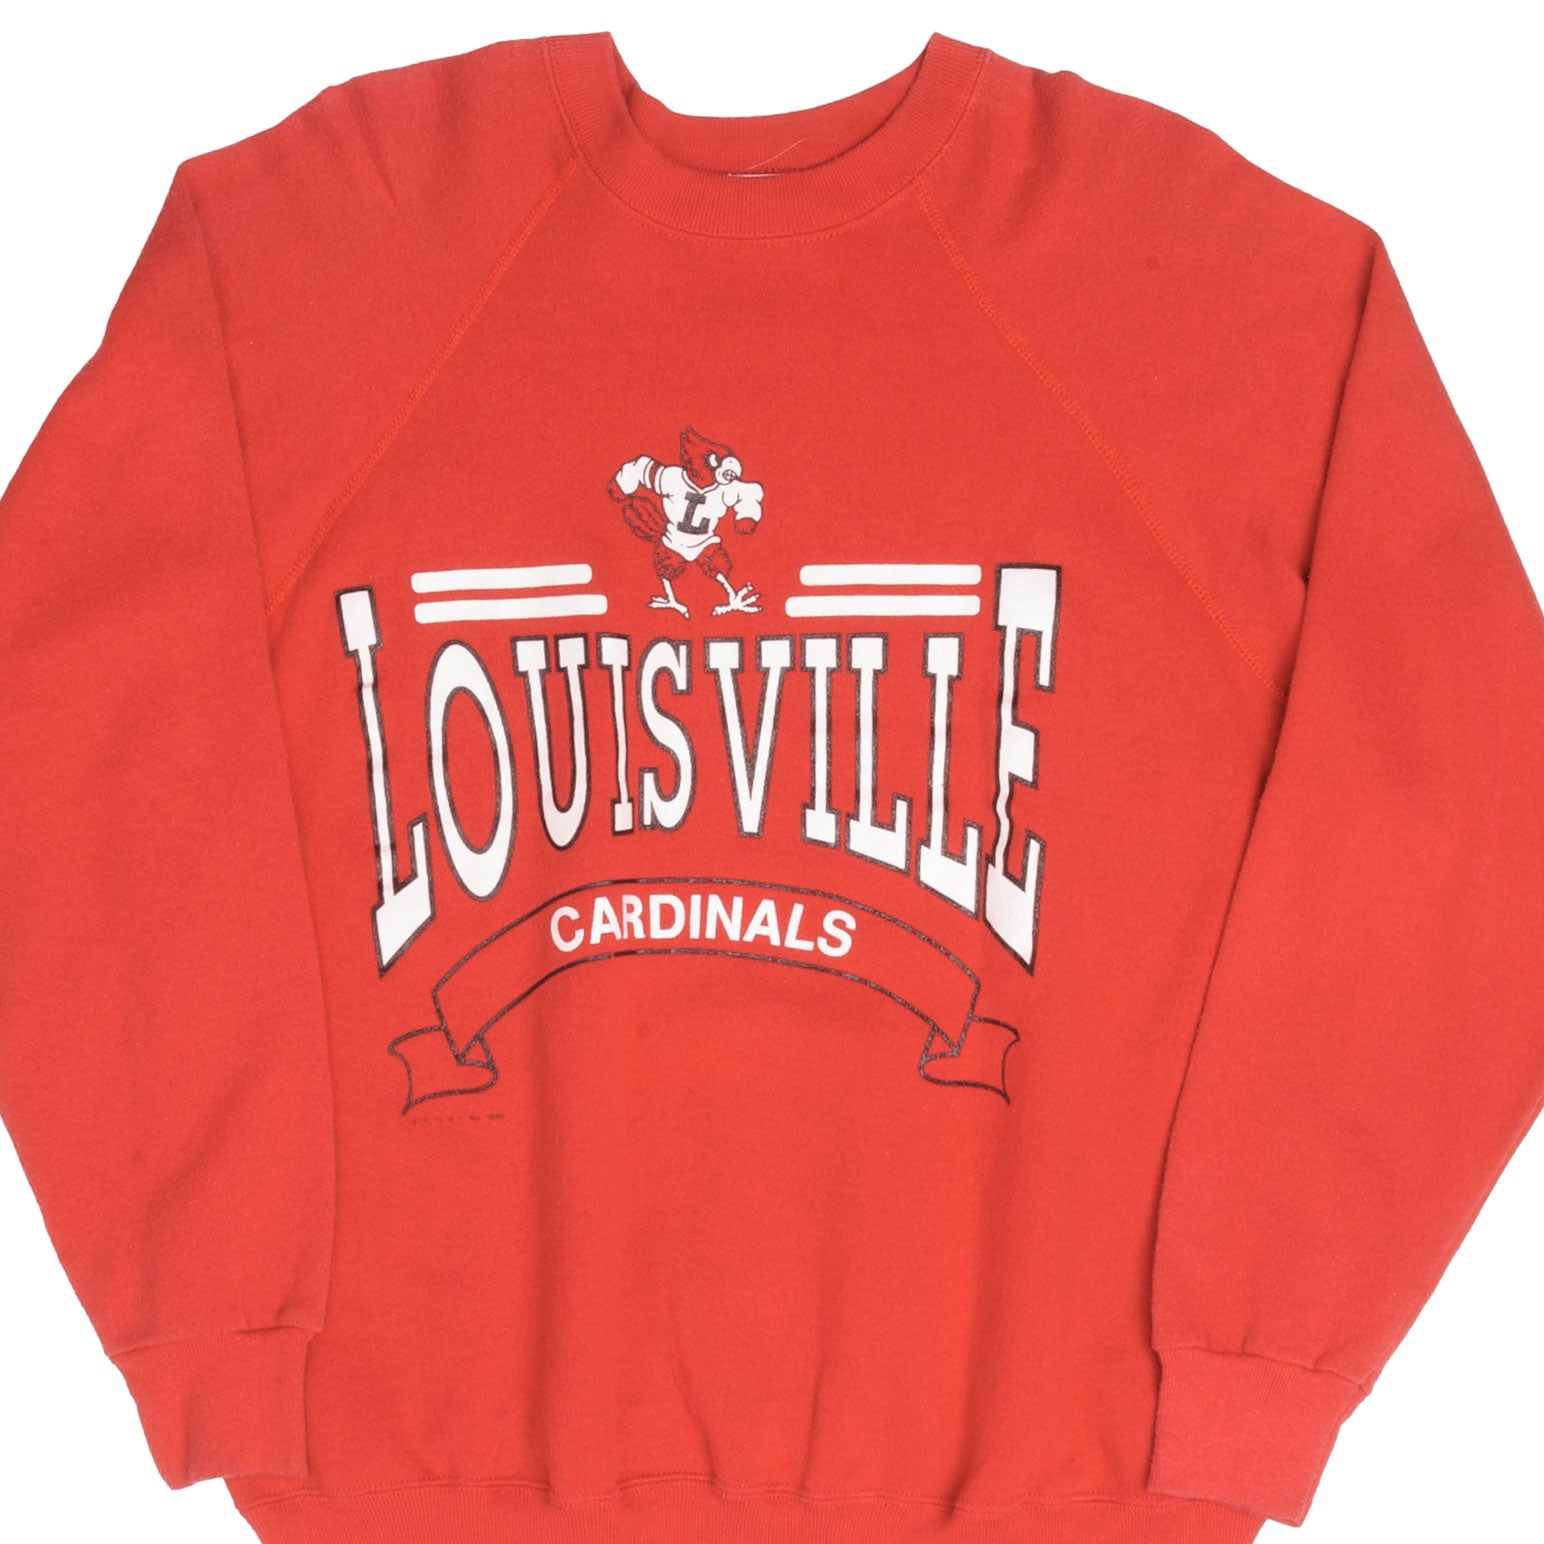 Vintage Louisville Cardinals Crewneck